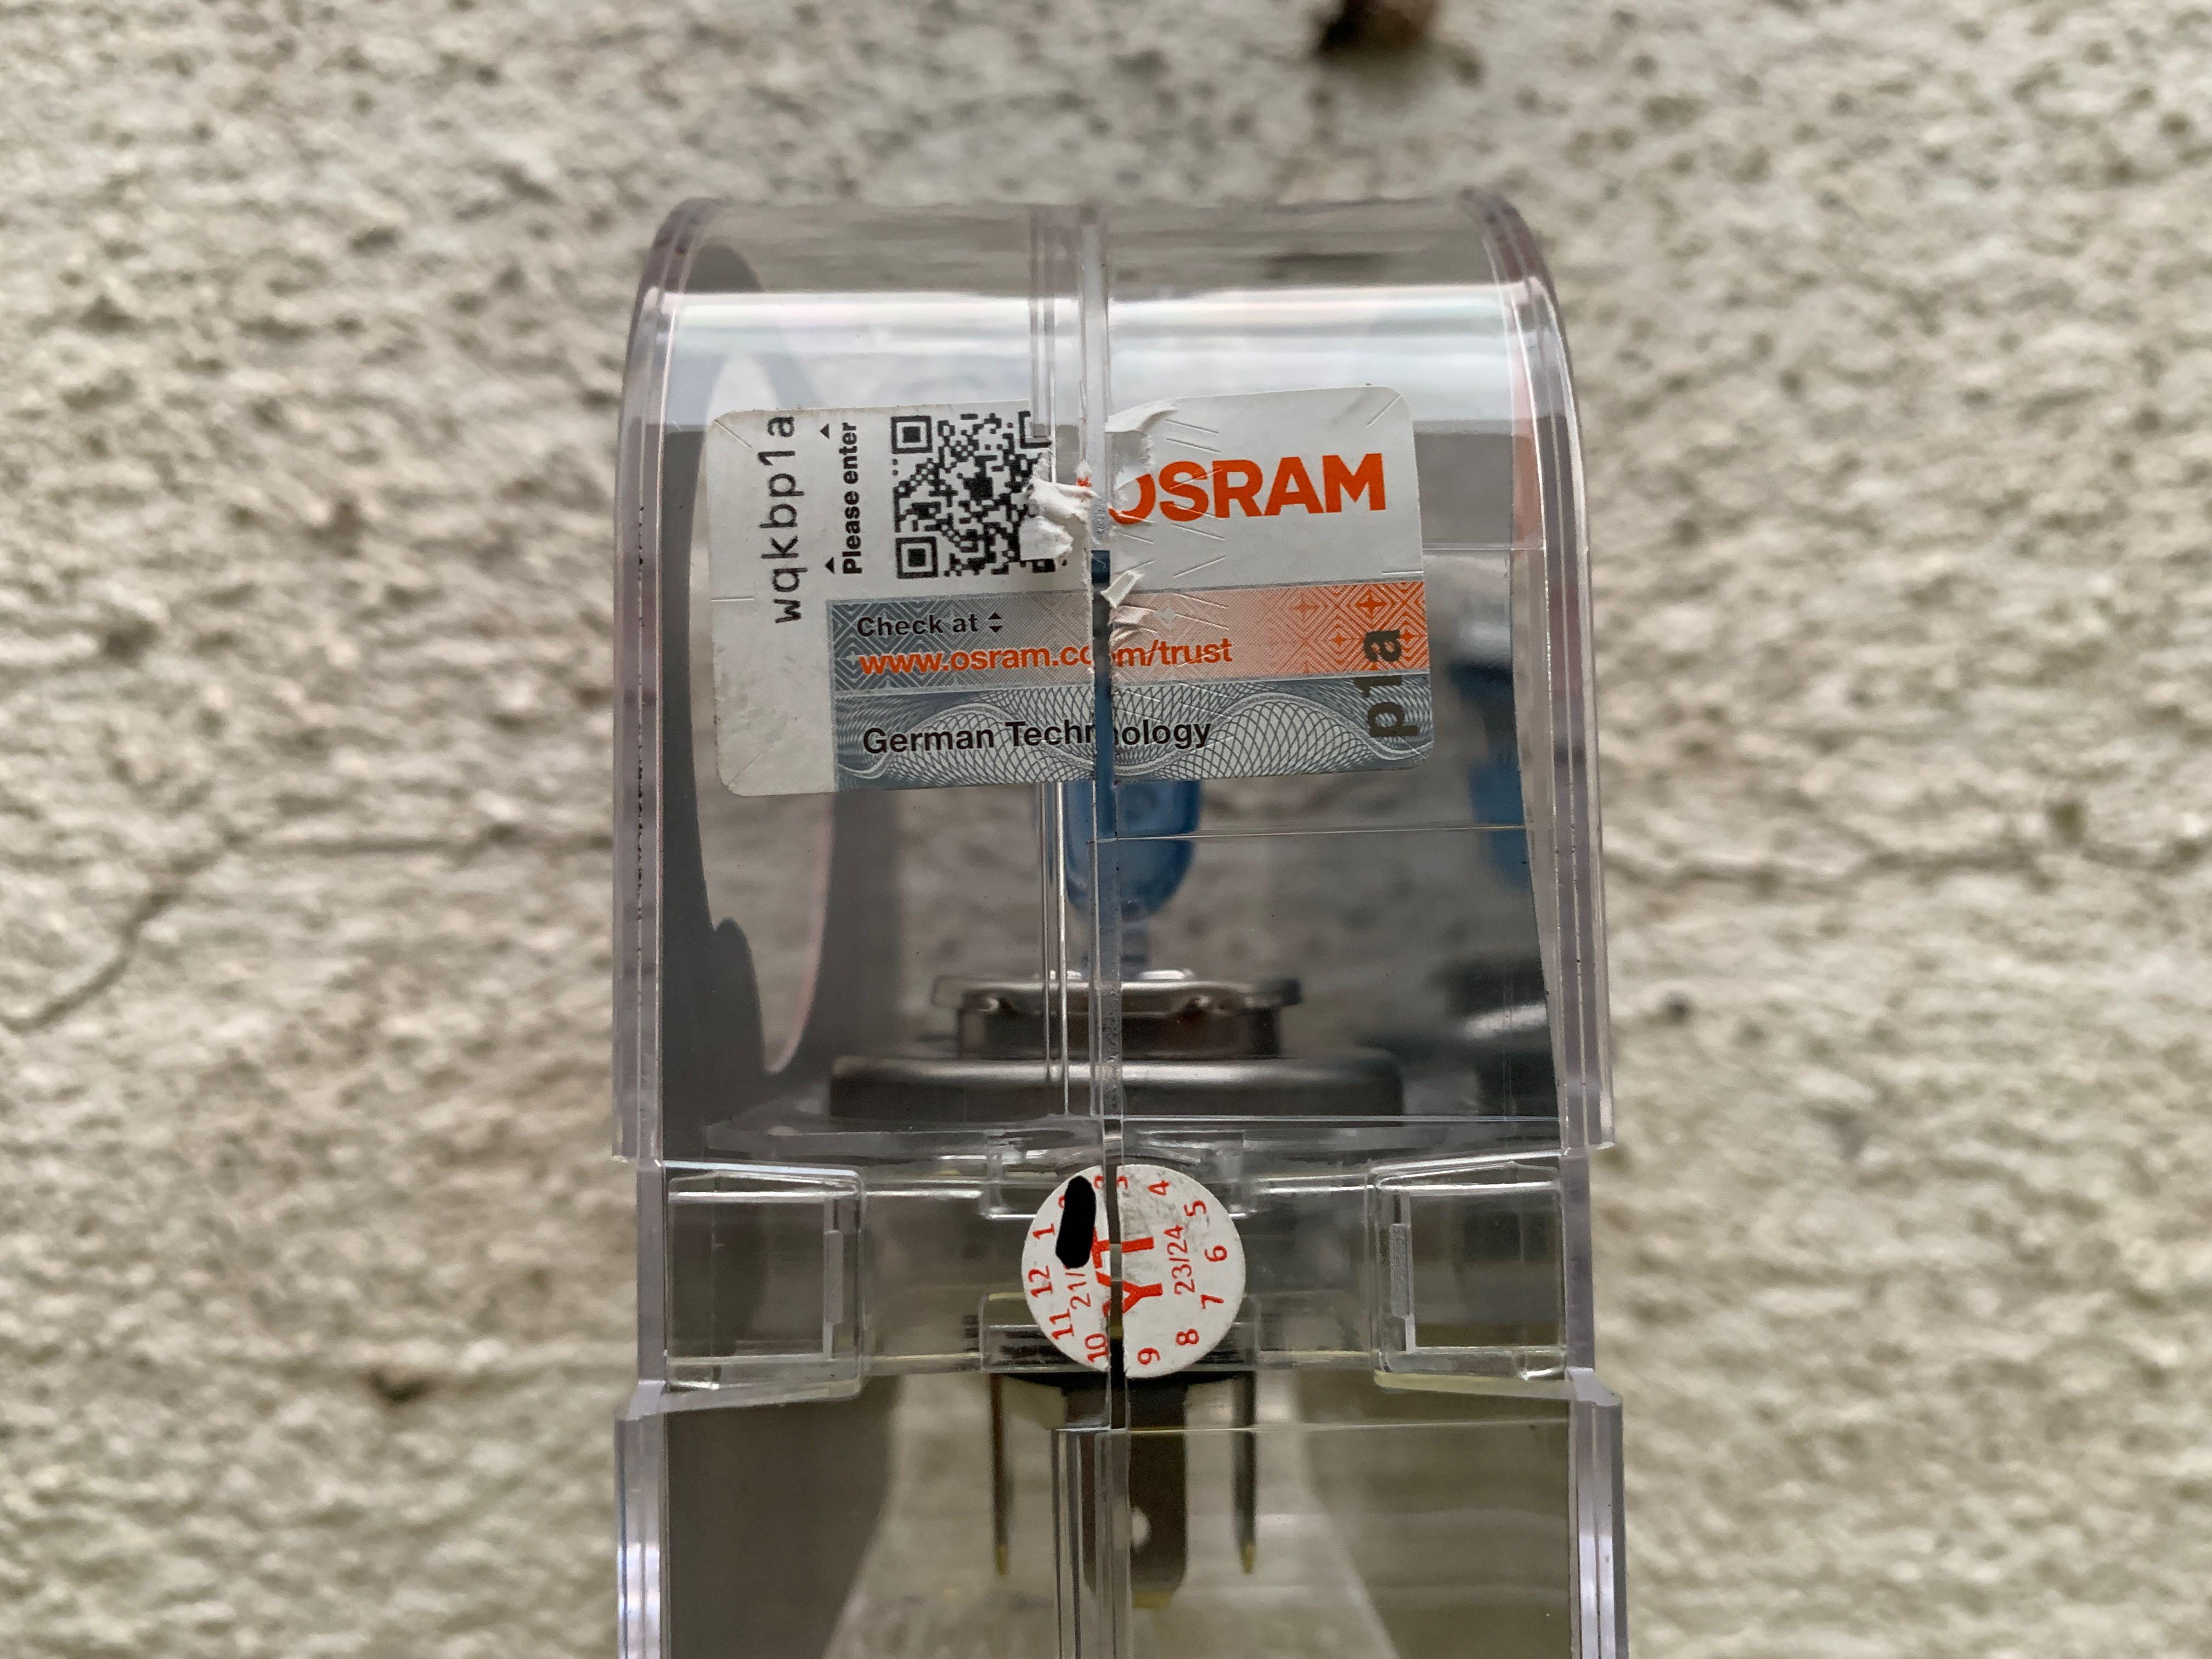 Osram Night Breaker Laser H4 +150%, Auto Accessories on Carousell